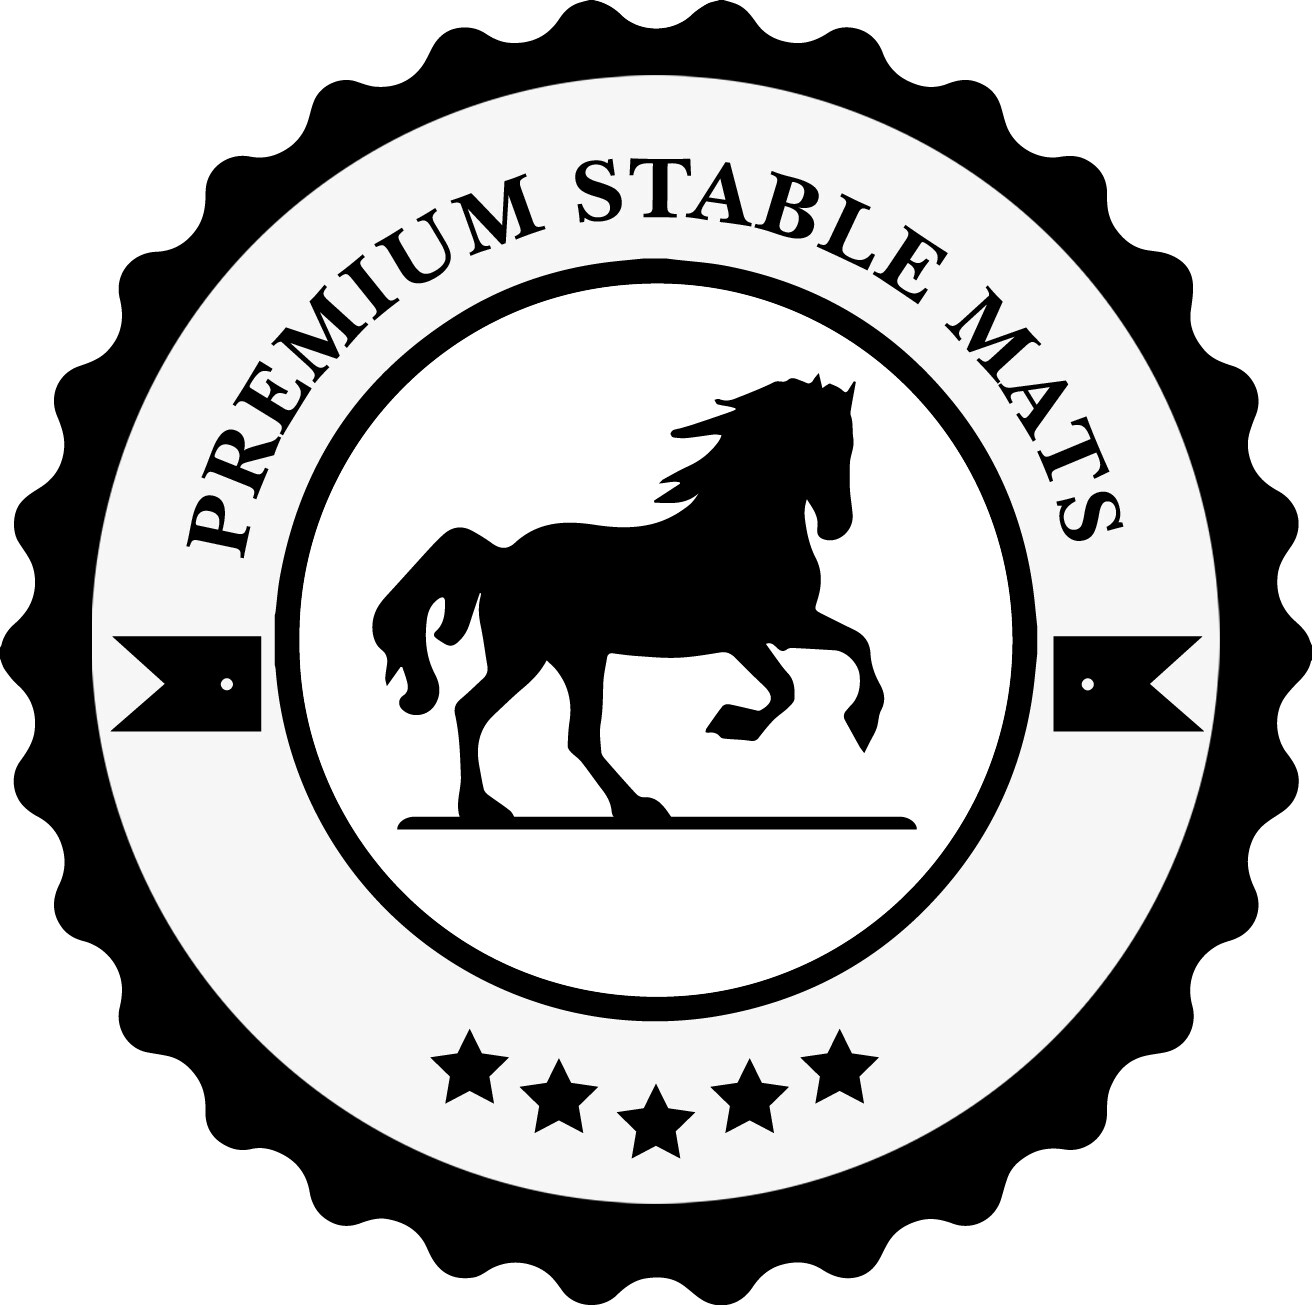 Premium Stable Mats Ltd